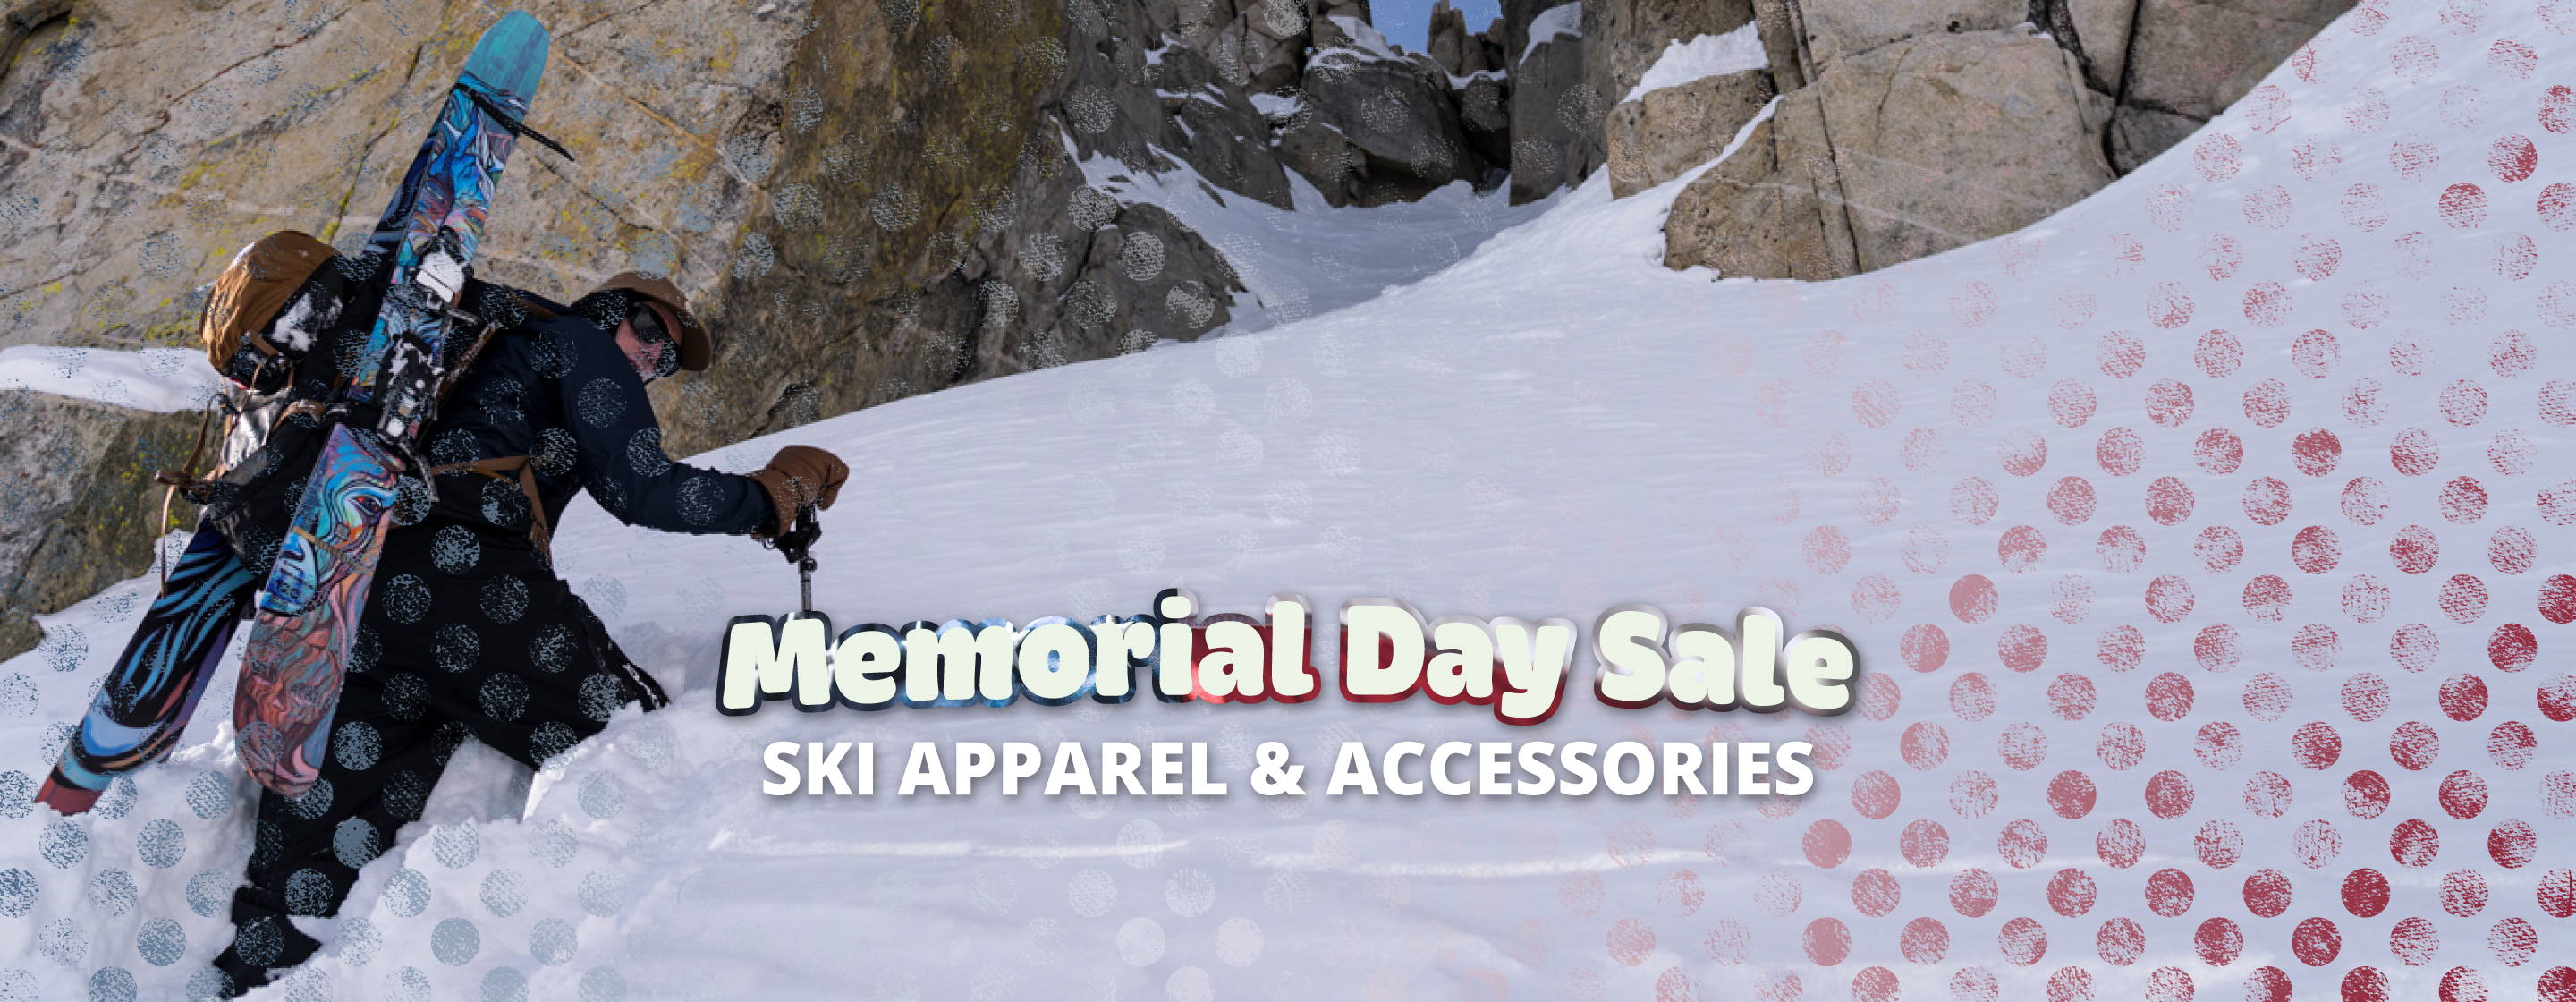 memorial day sale: ski apparel and accessories